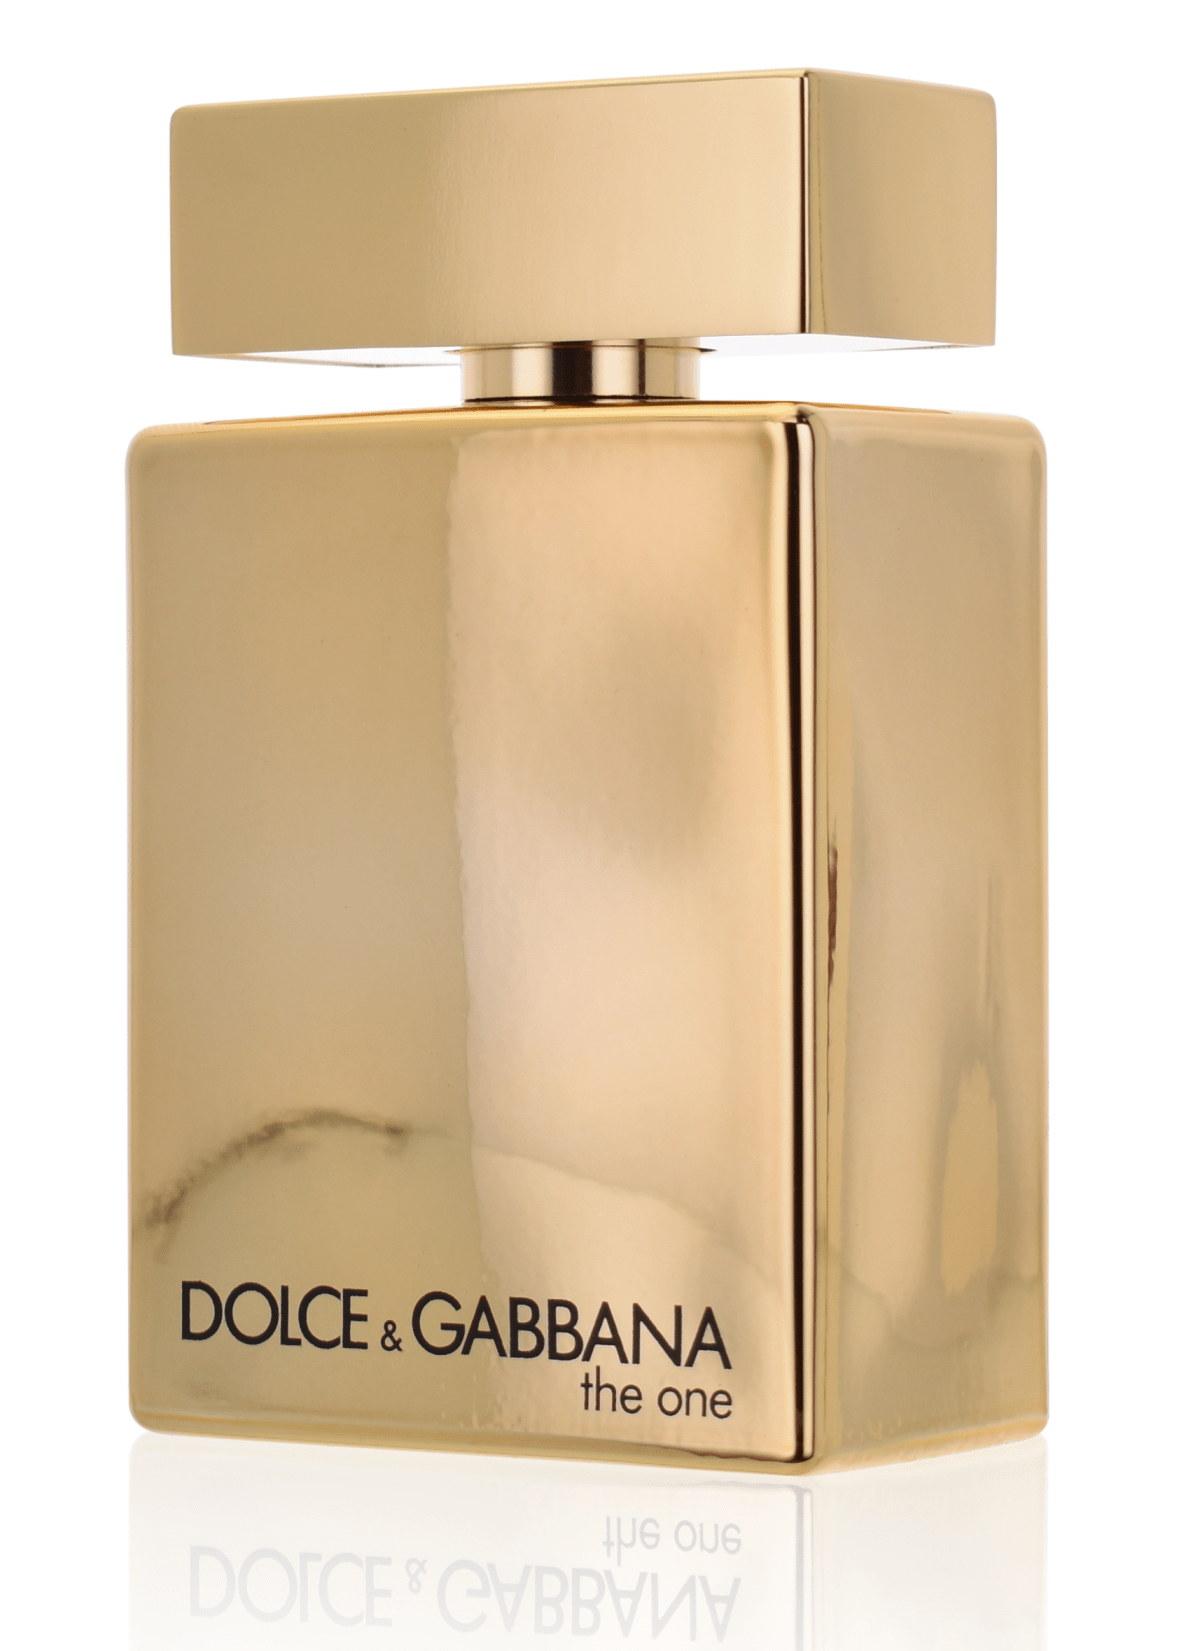 Dolce & Gabbana The One for Men Gold 50 ml Eau de Parfum Intense  